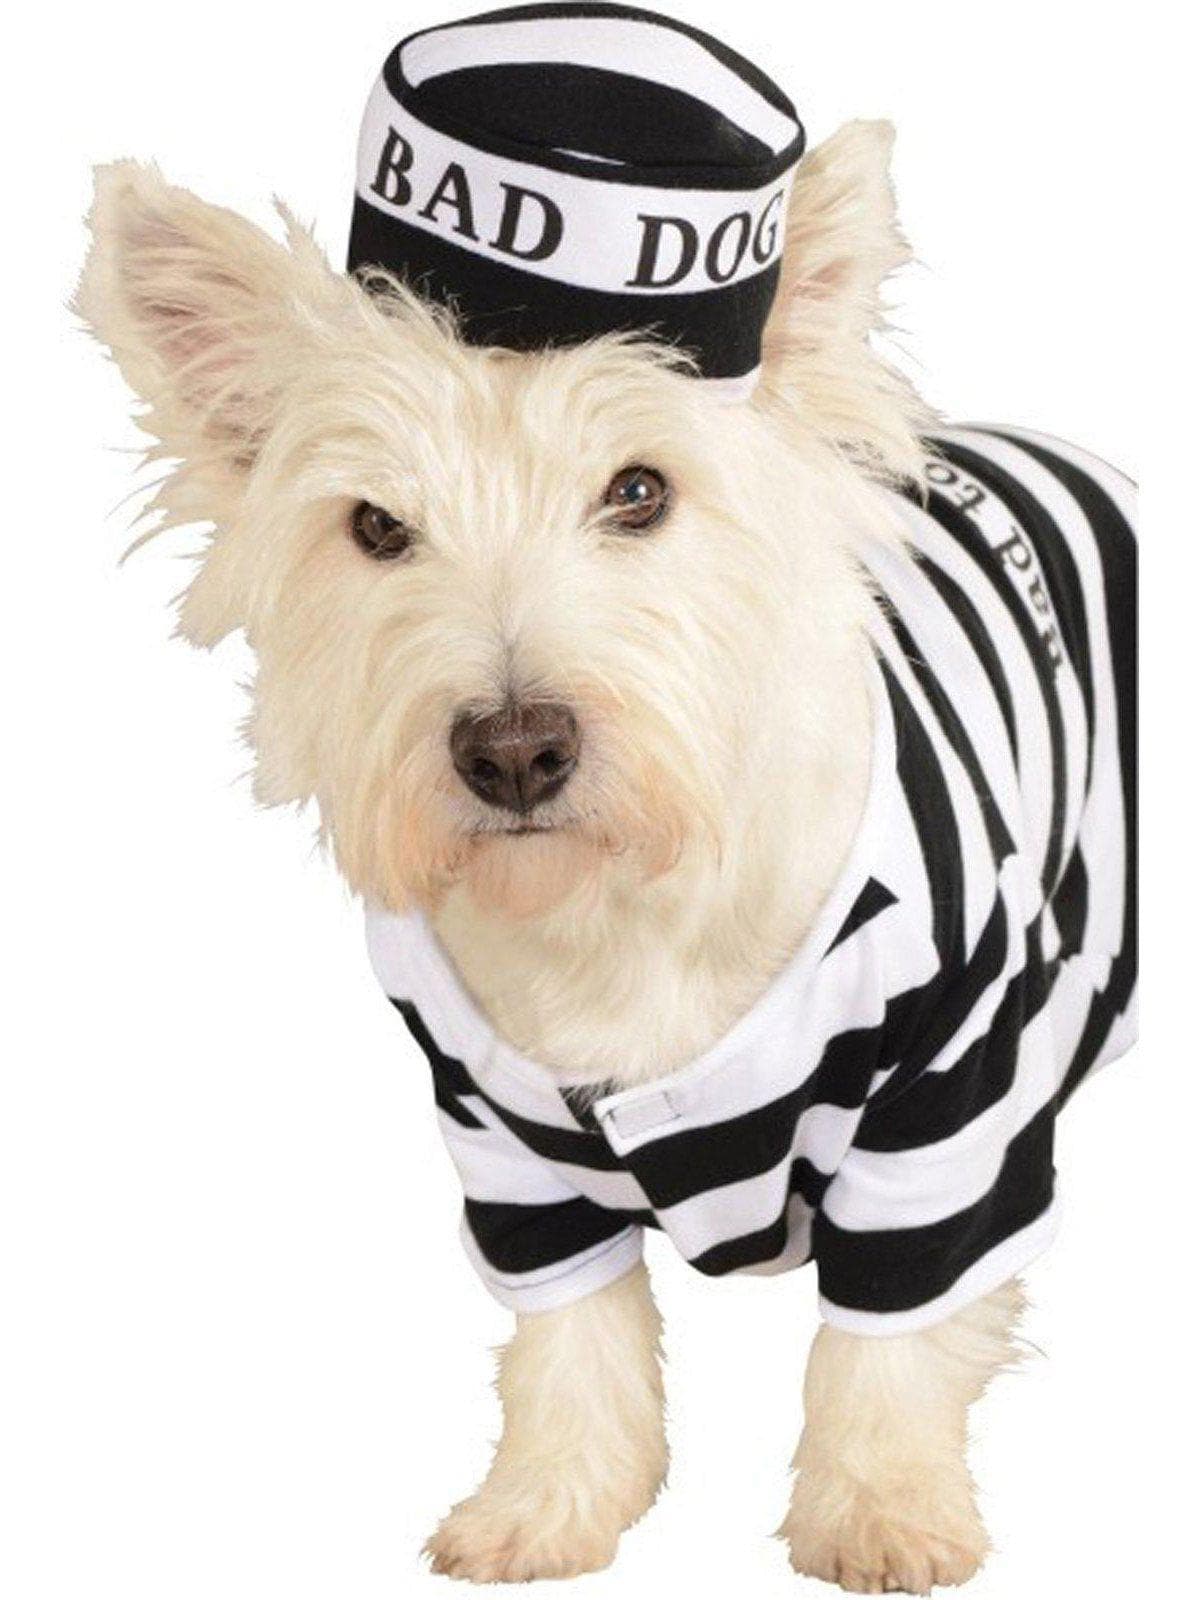 Bad Dog Prisoner Pet Costume - costumes.com